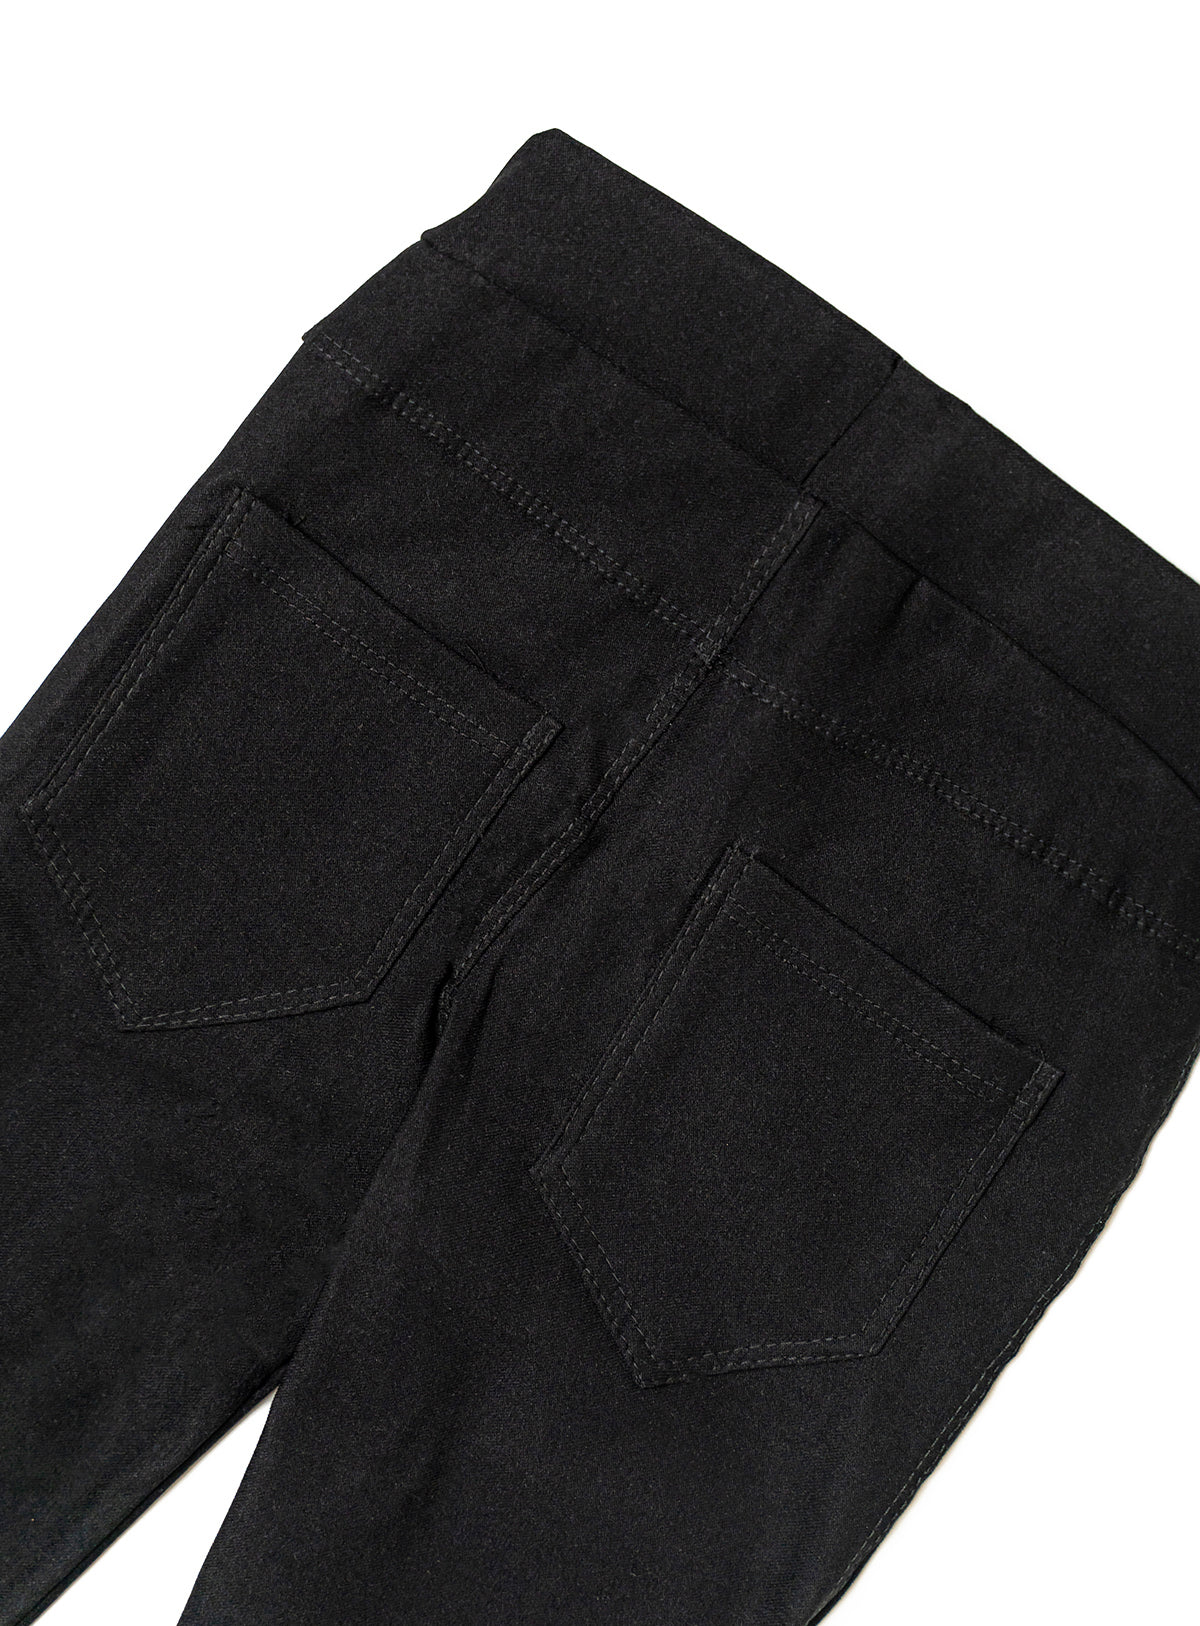 opaque black skinny pants